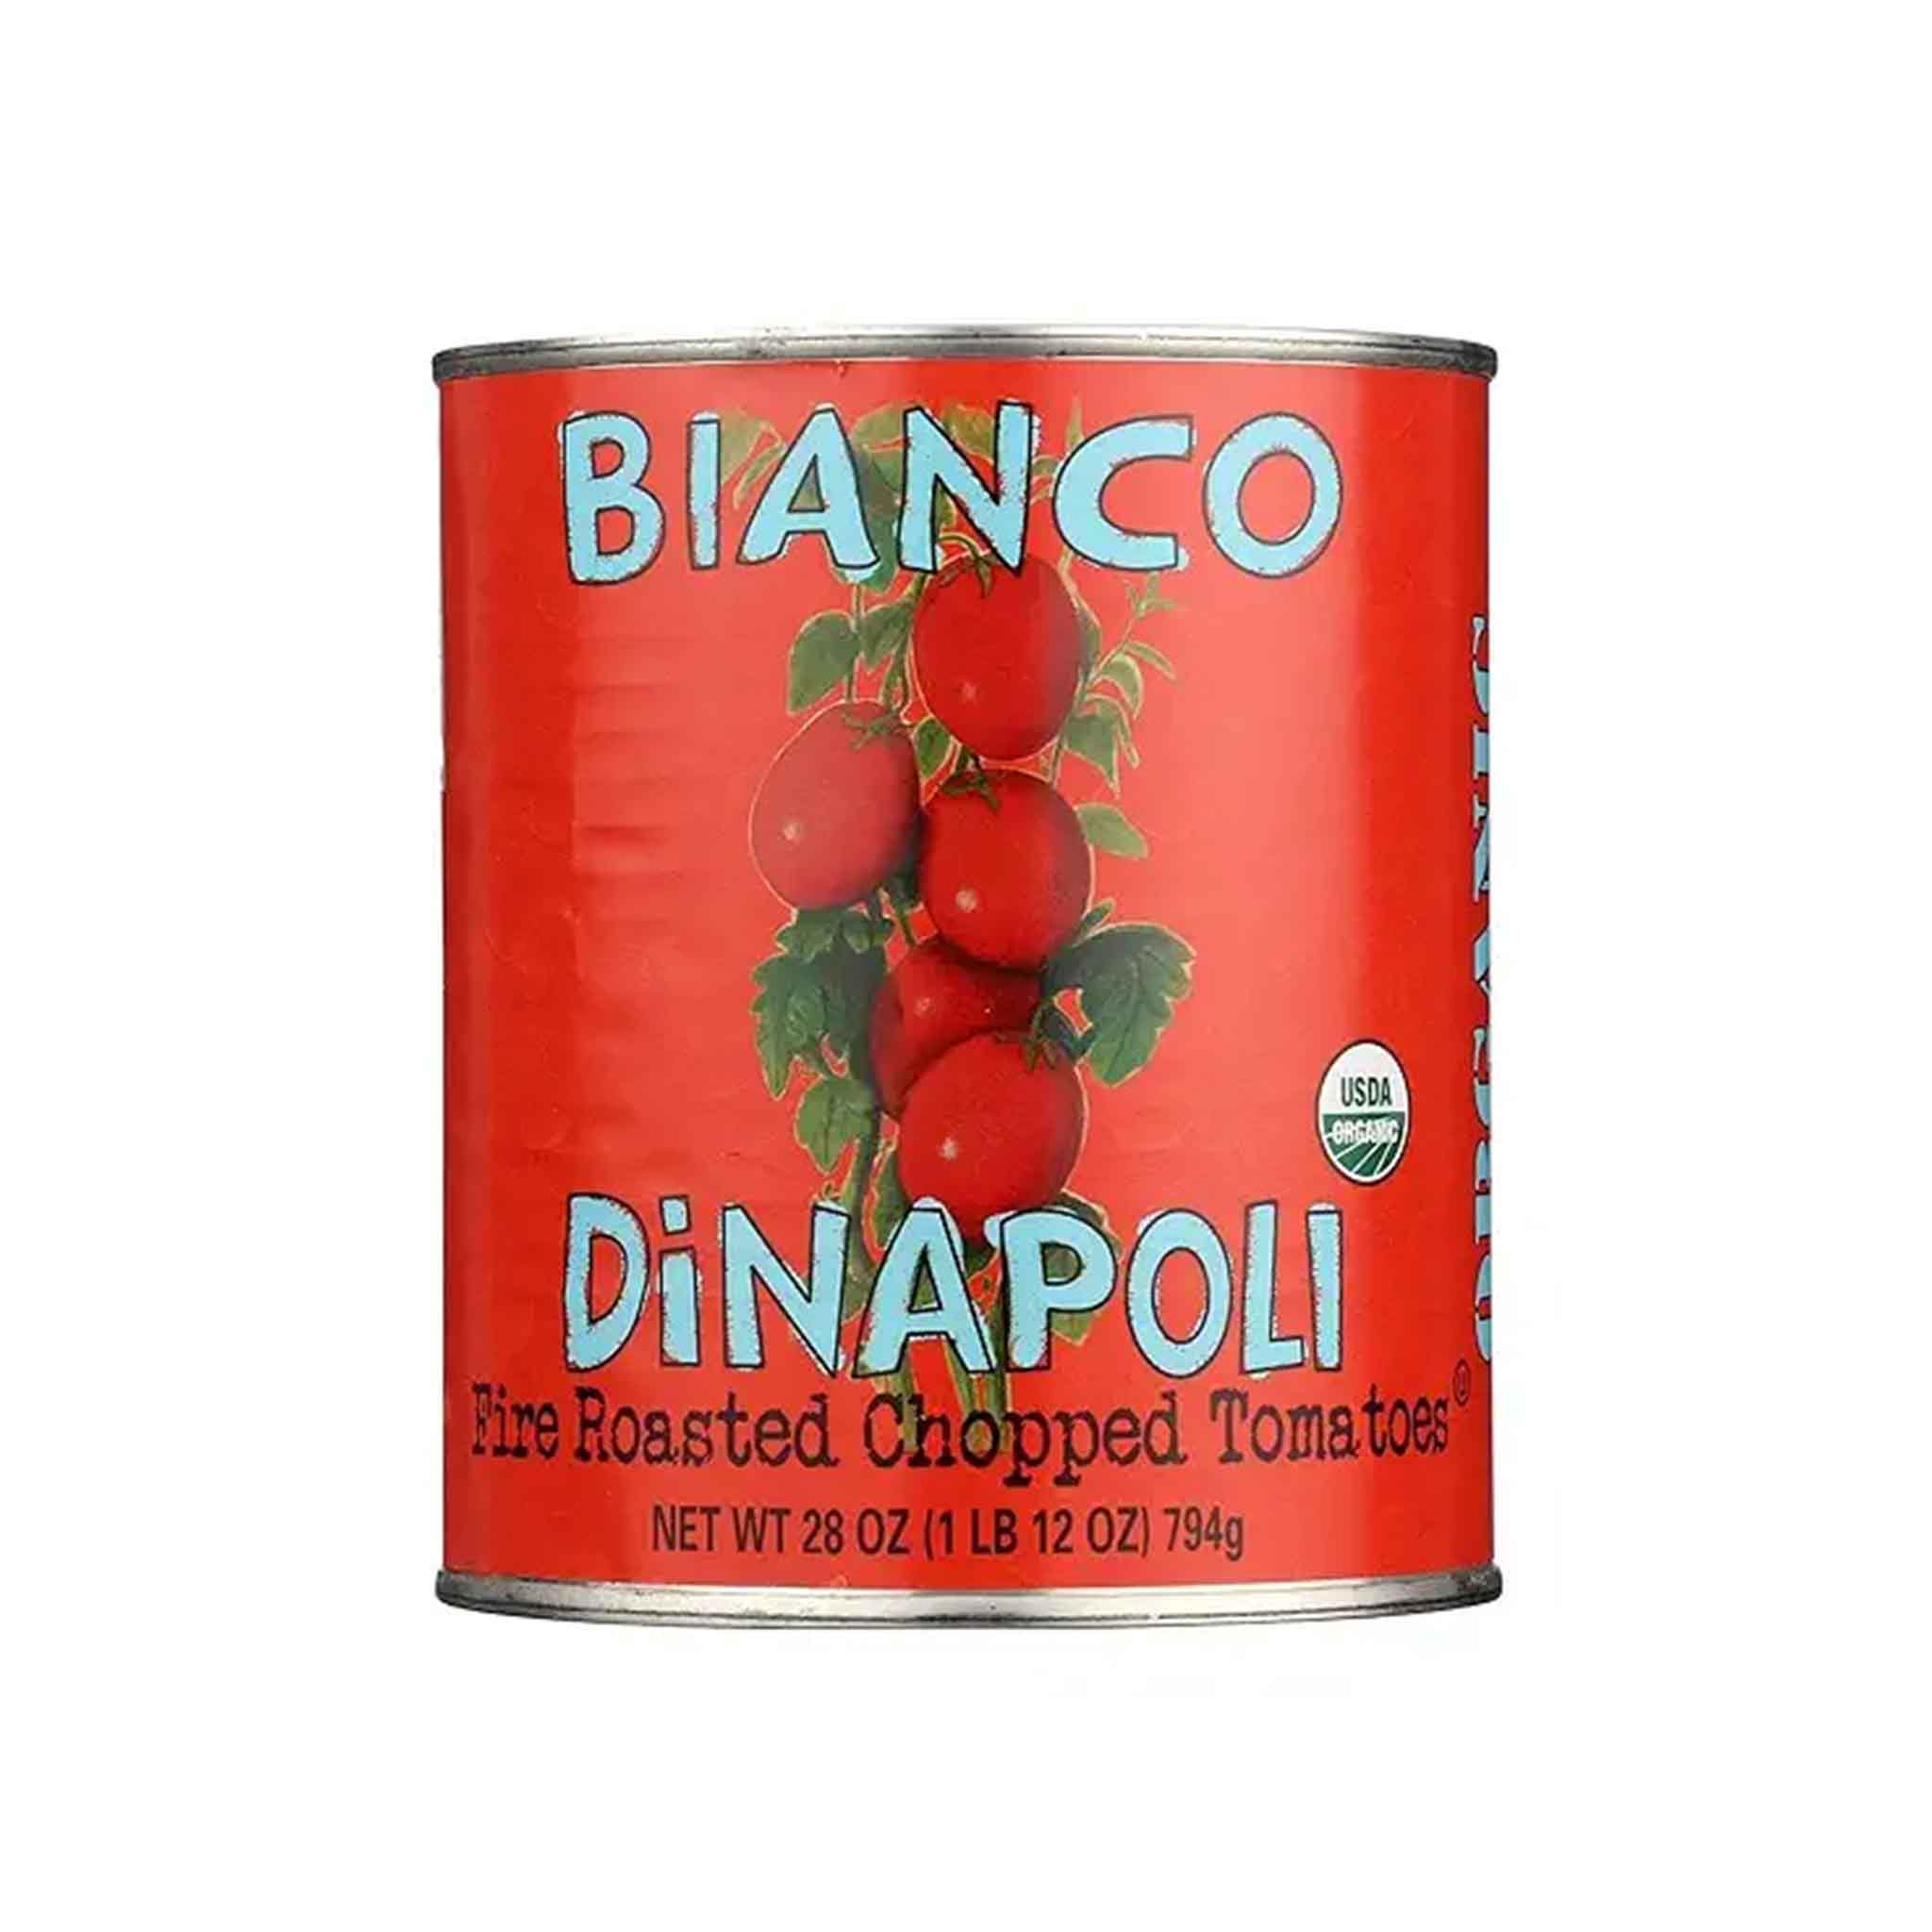 Bianco DiNapoli Fire Roasted Chopped Tomatoes